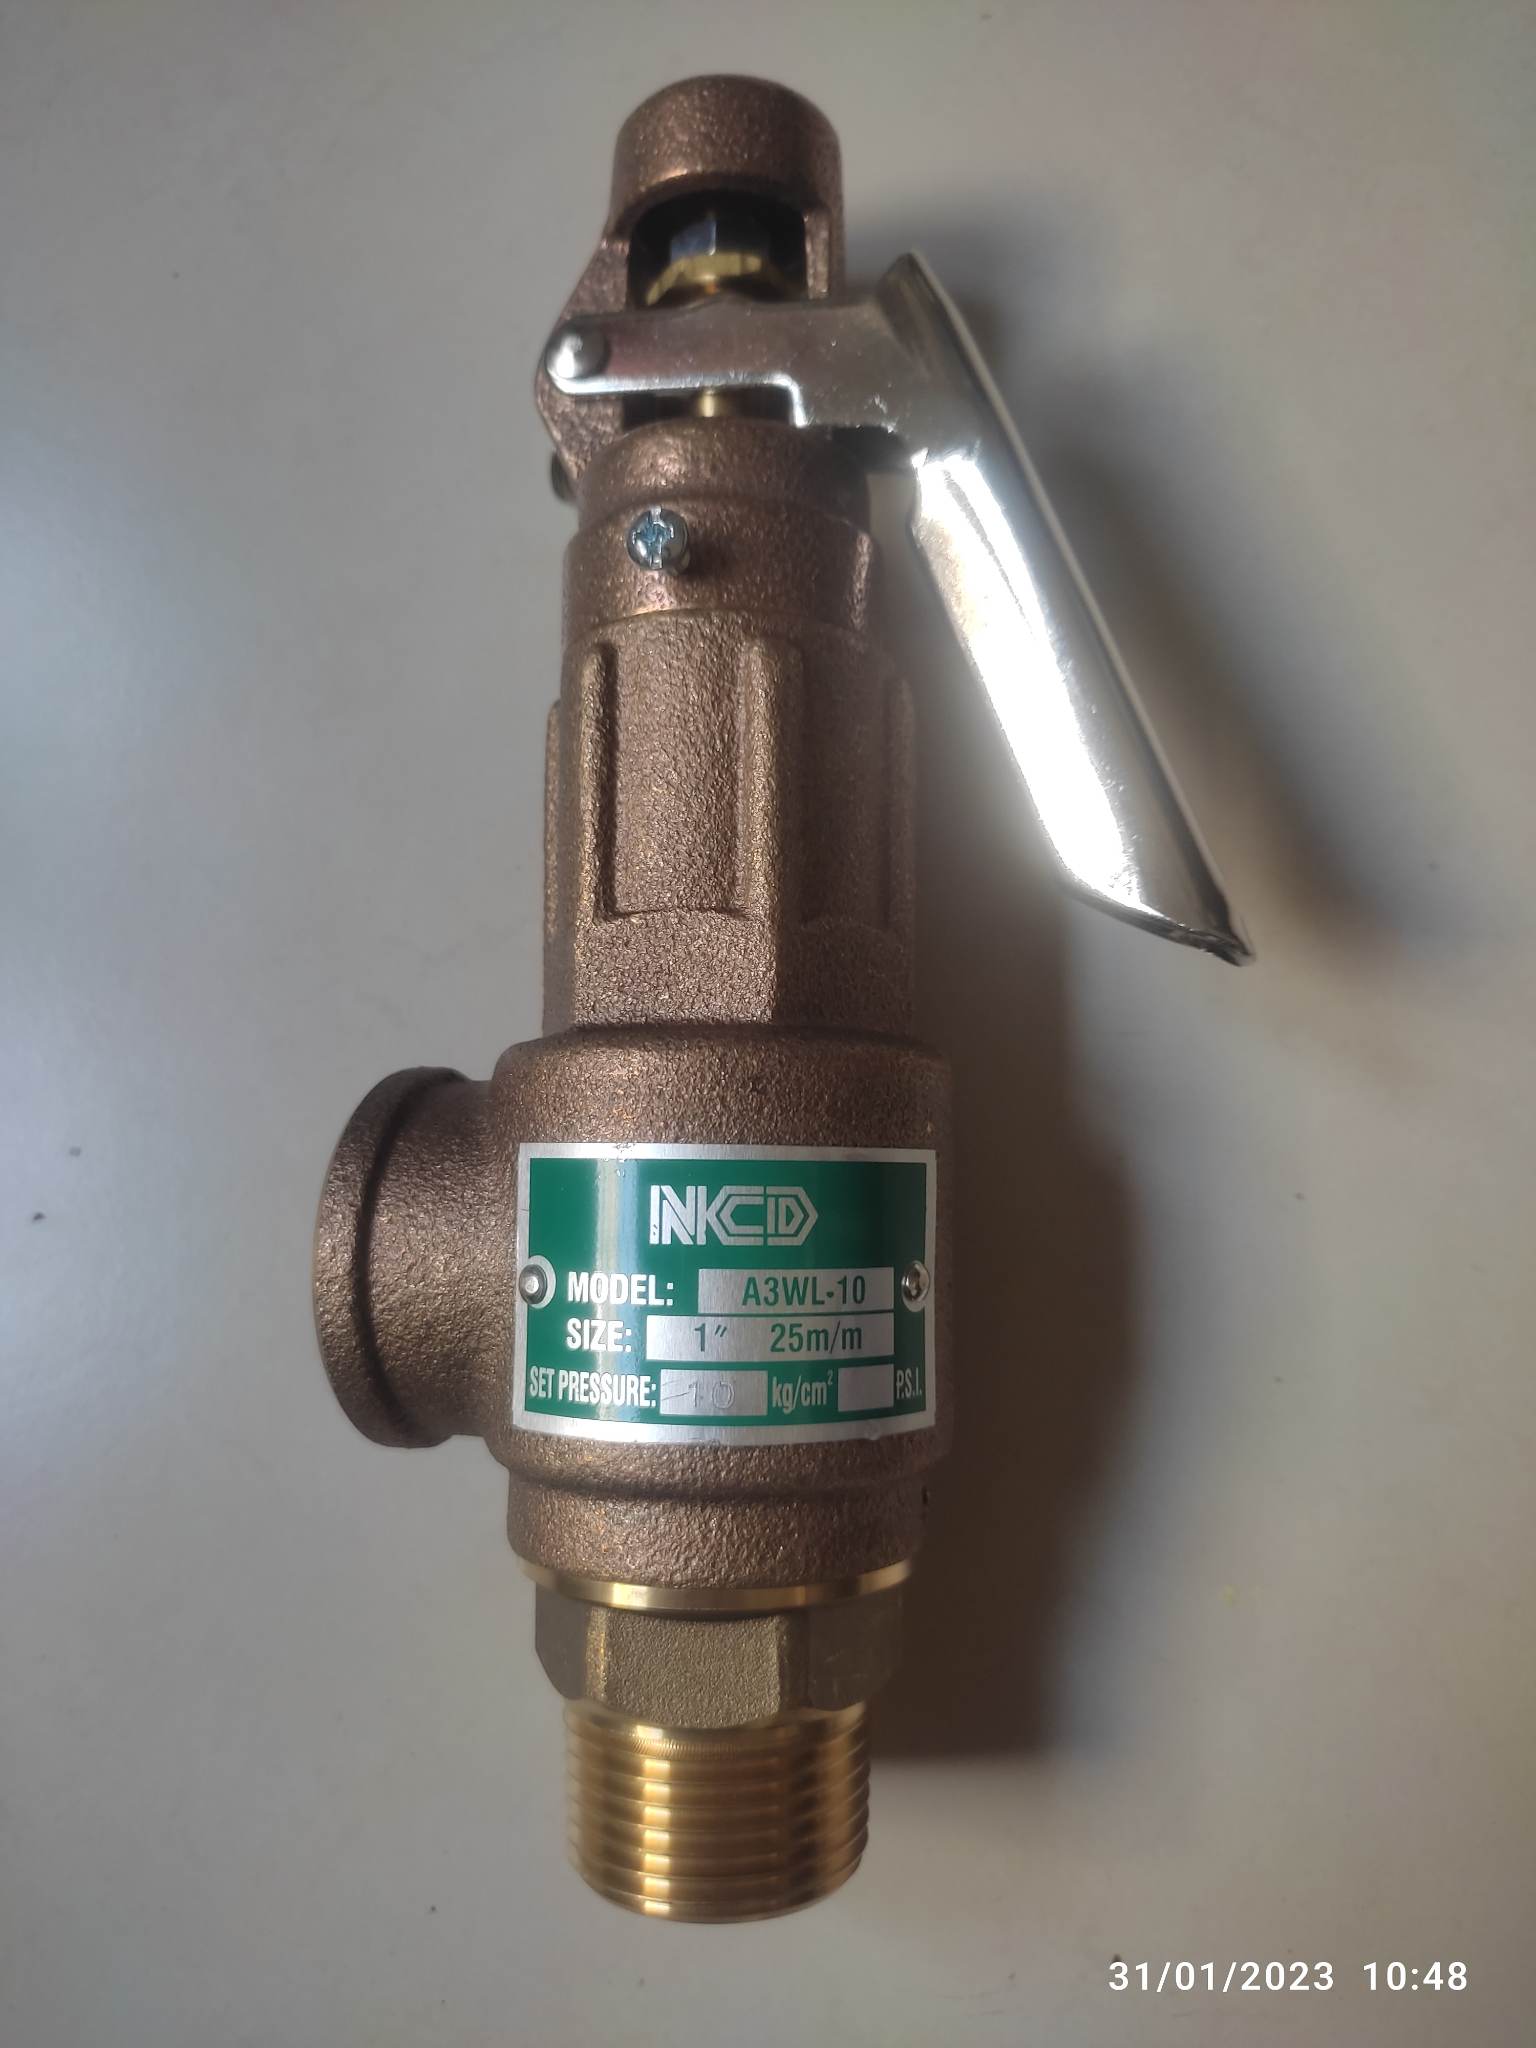 A3WL-10-10 NCD safety relief valve size 1" ทองเหลือง มีด้าม Pressure 10 kg/cm2 (bar) 150 psi